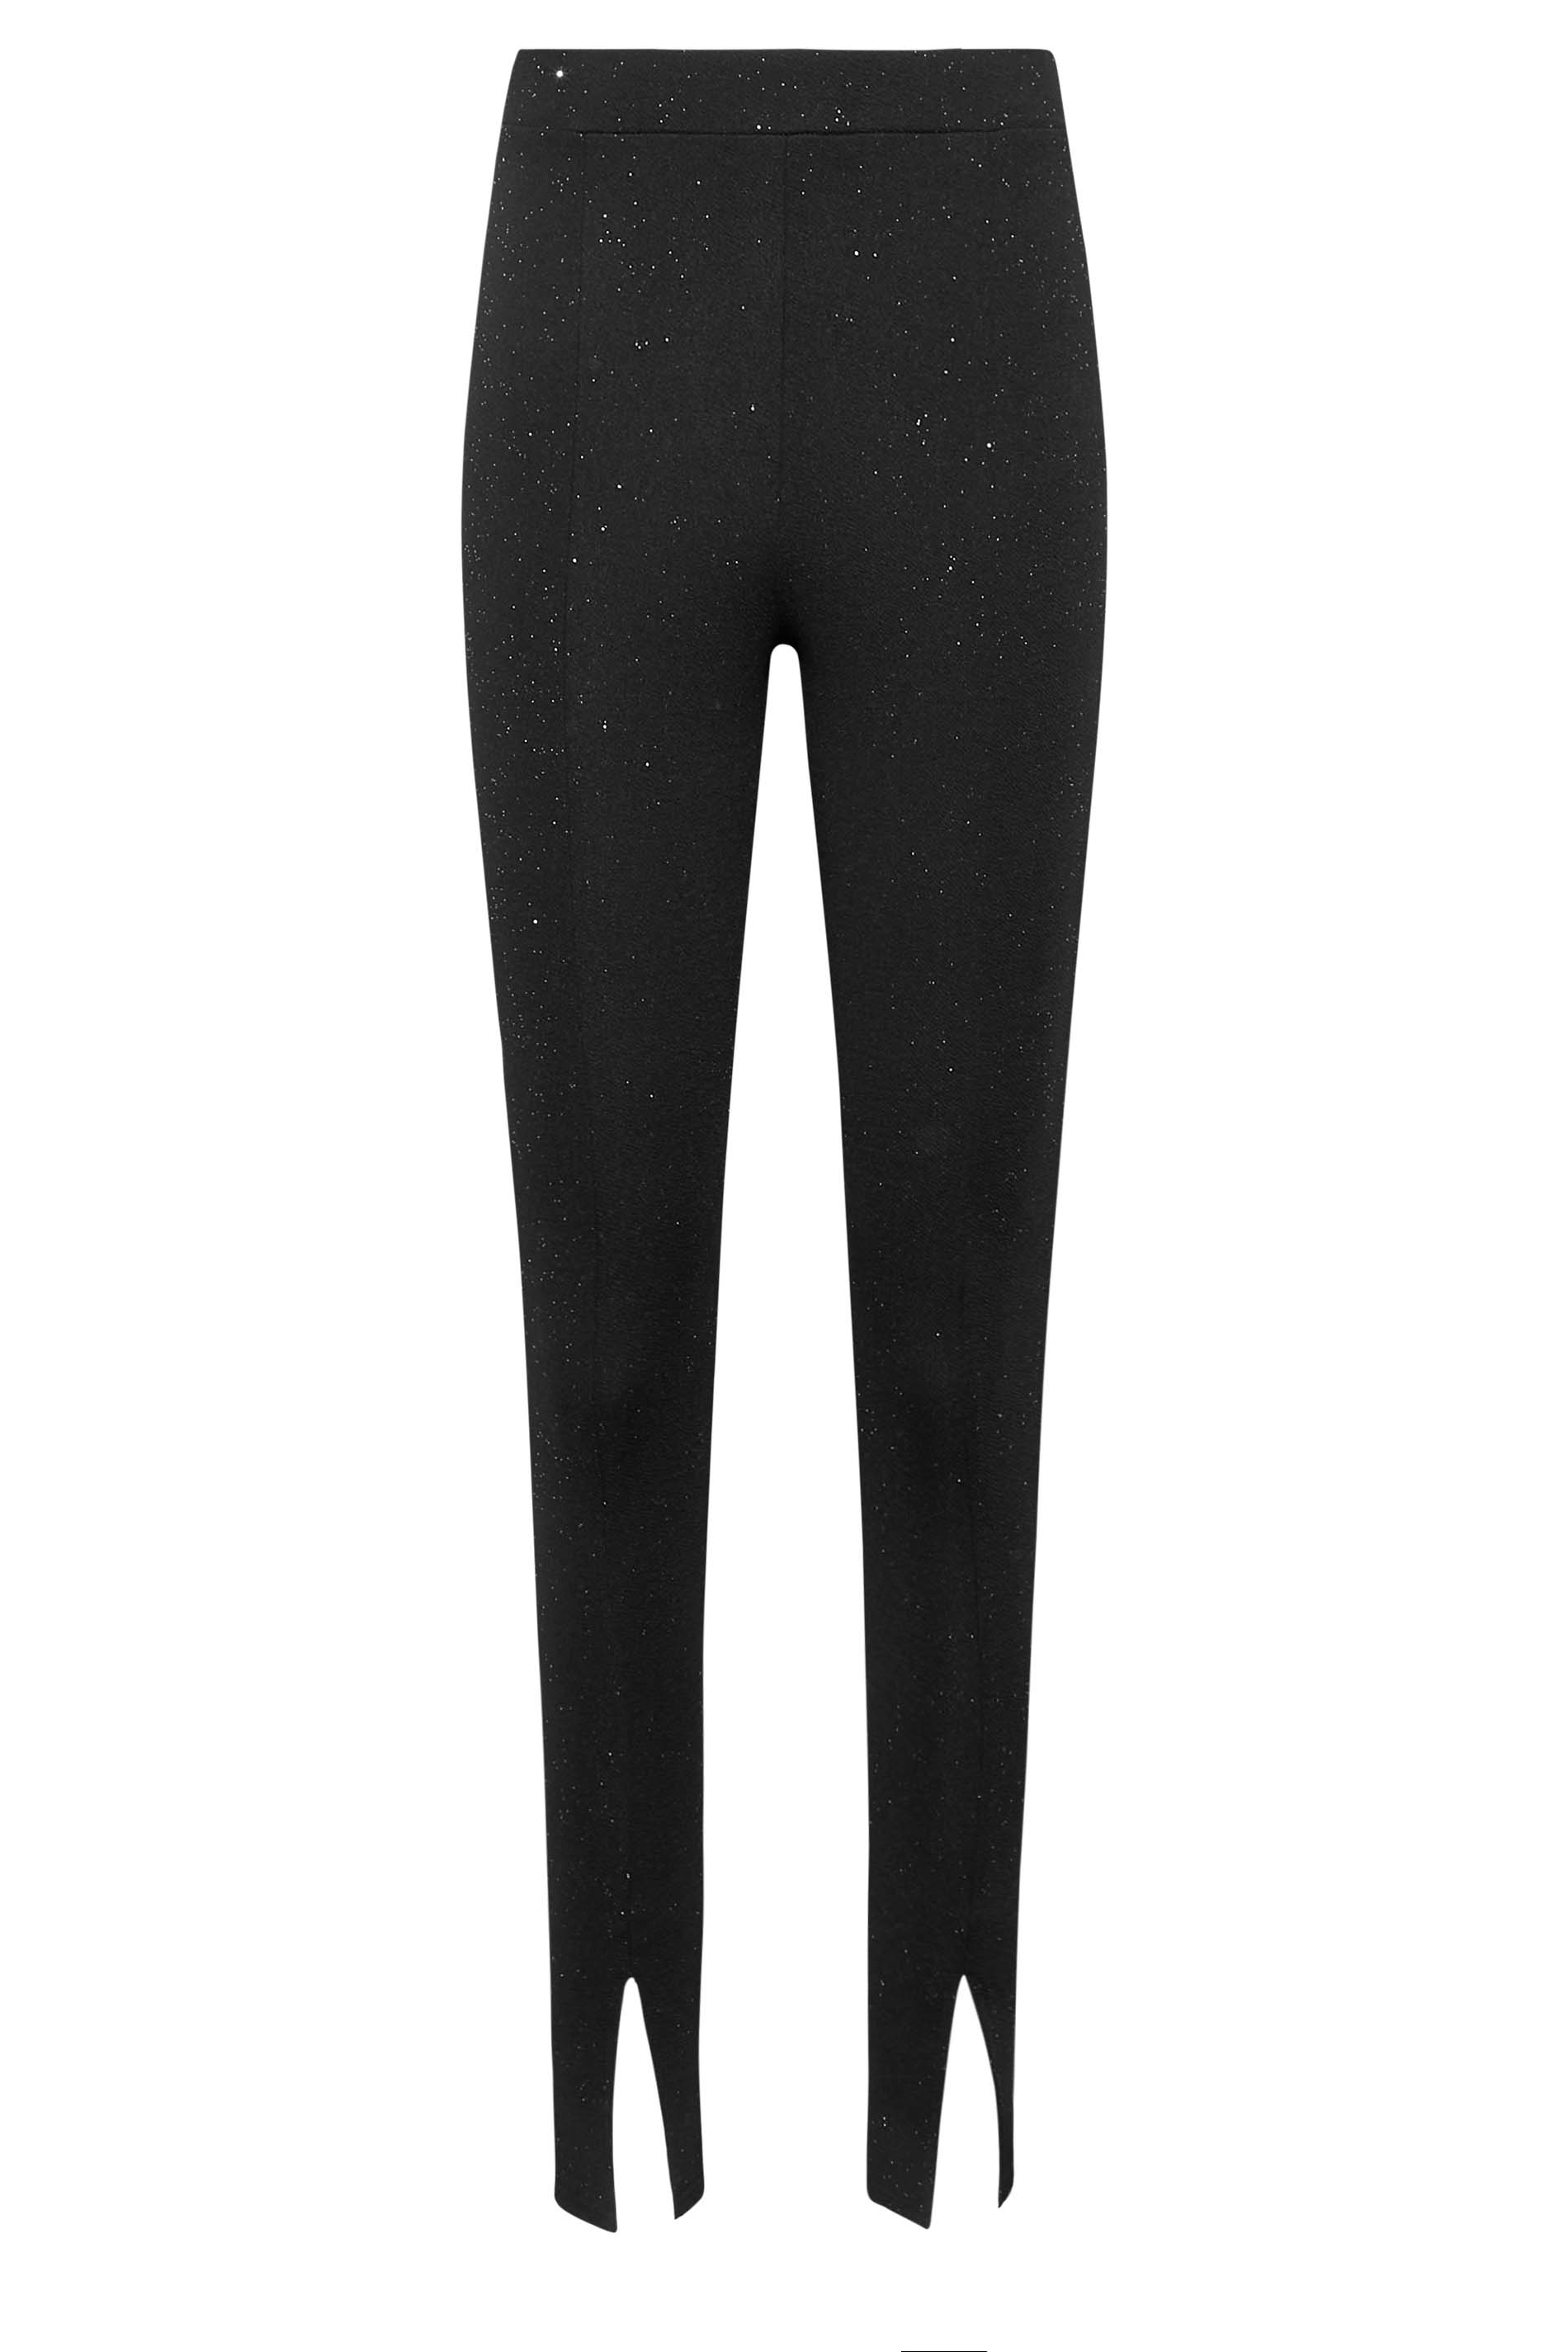 LTS Tall Black Spilt Hem Tapered Trousers | Long Tall Sally  2